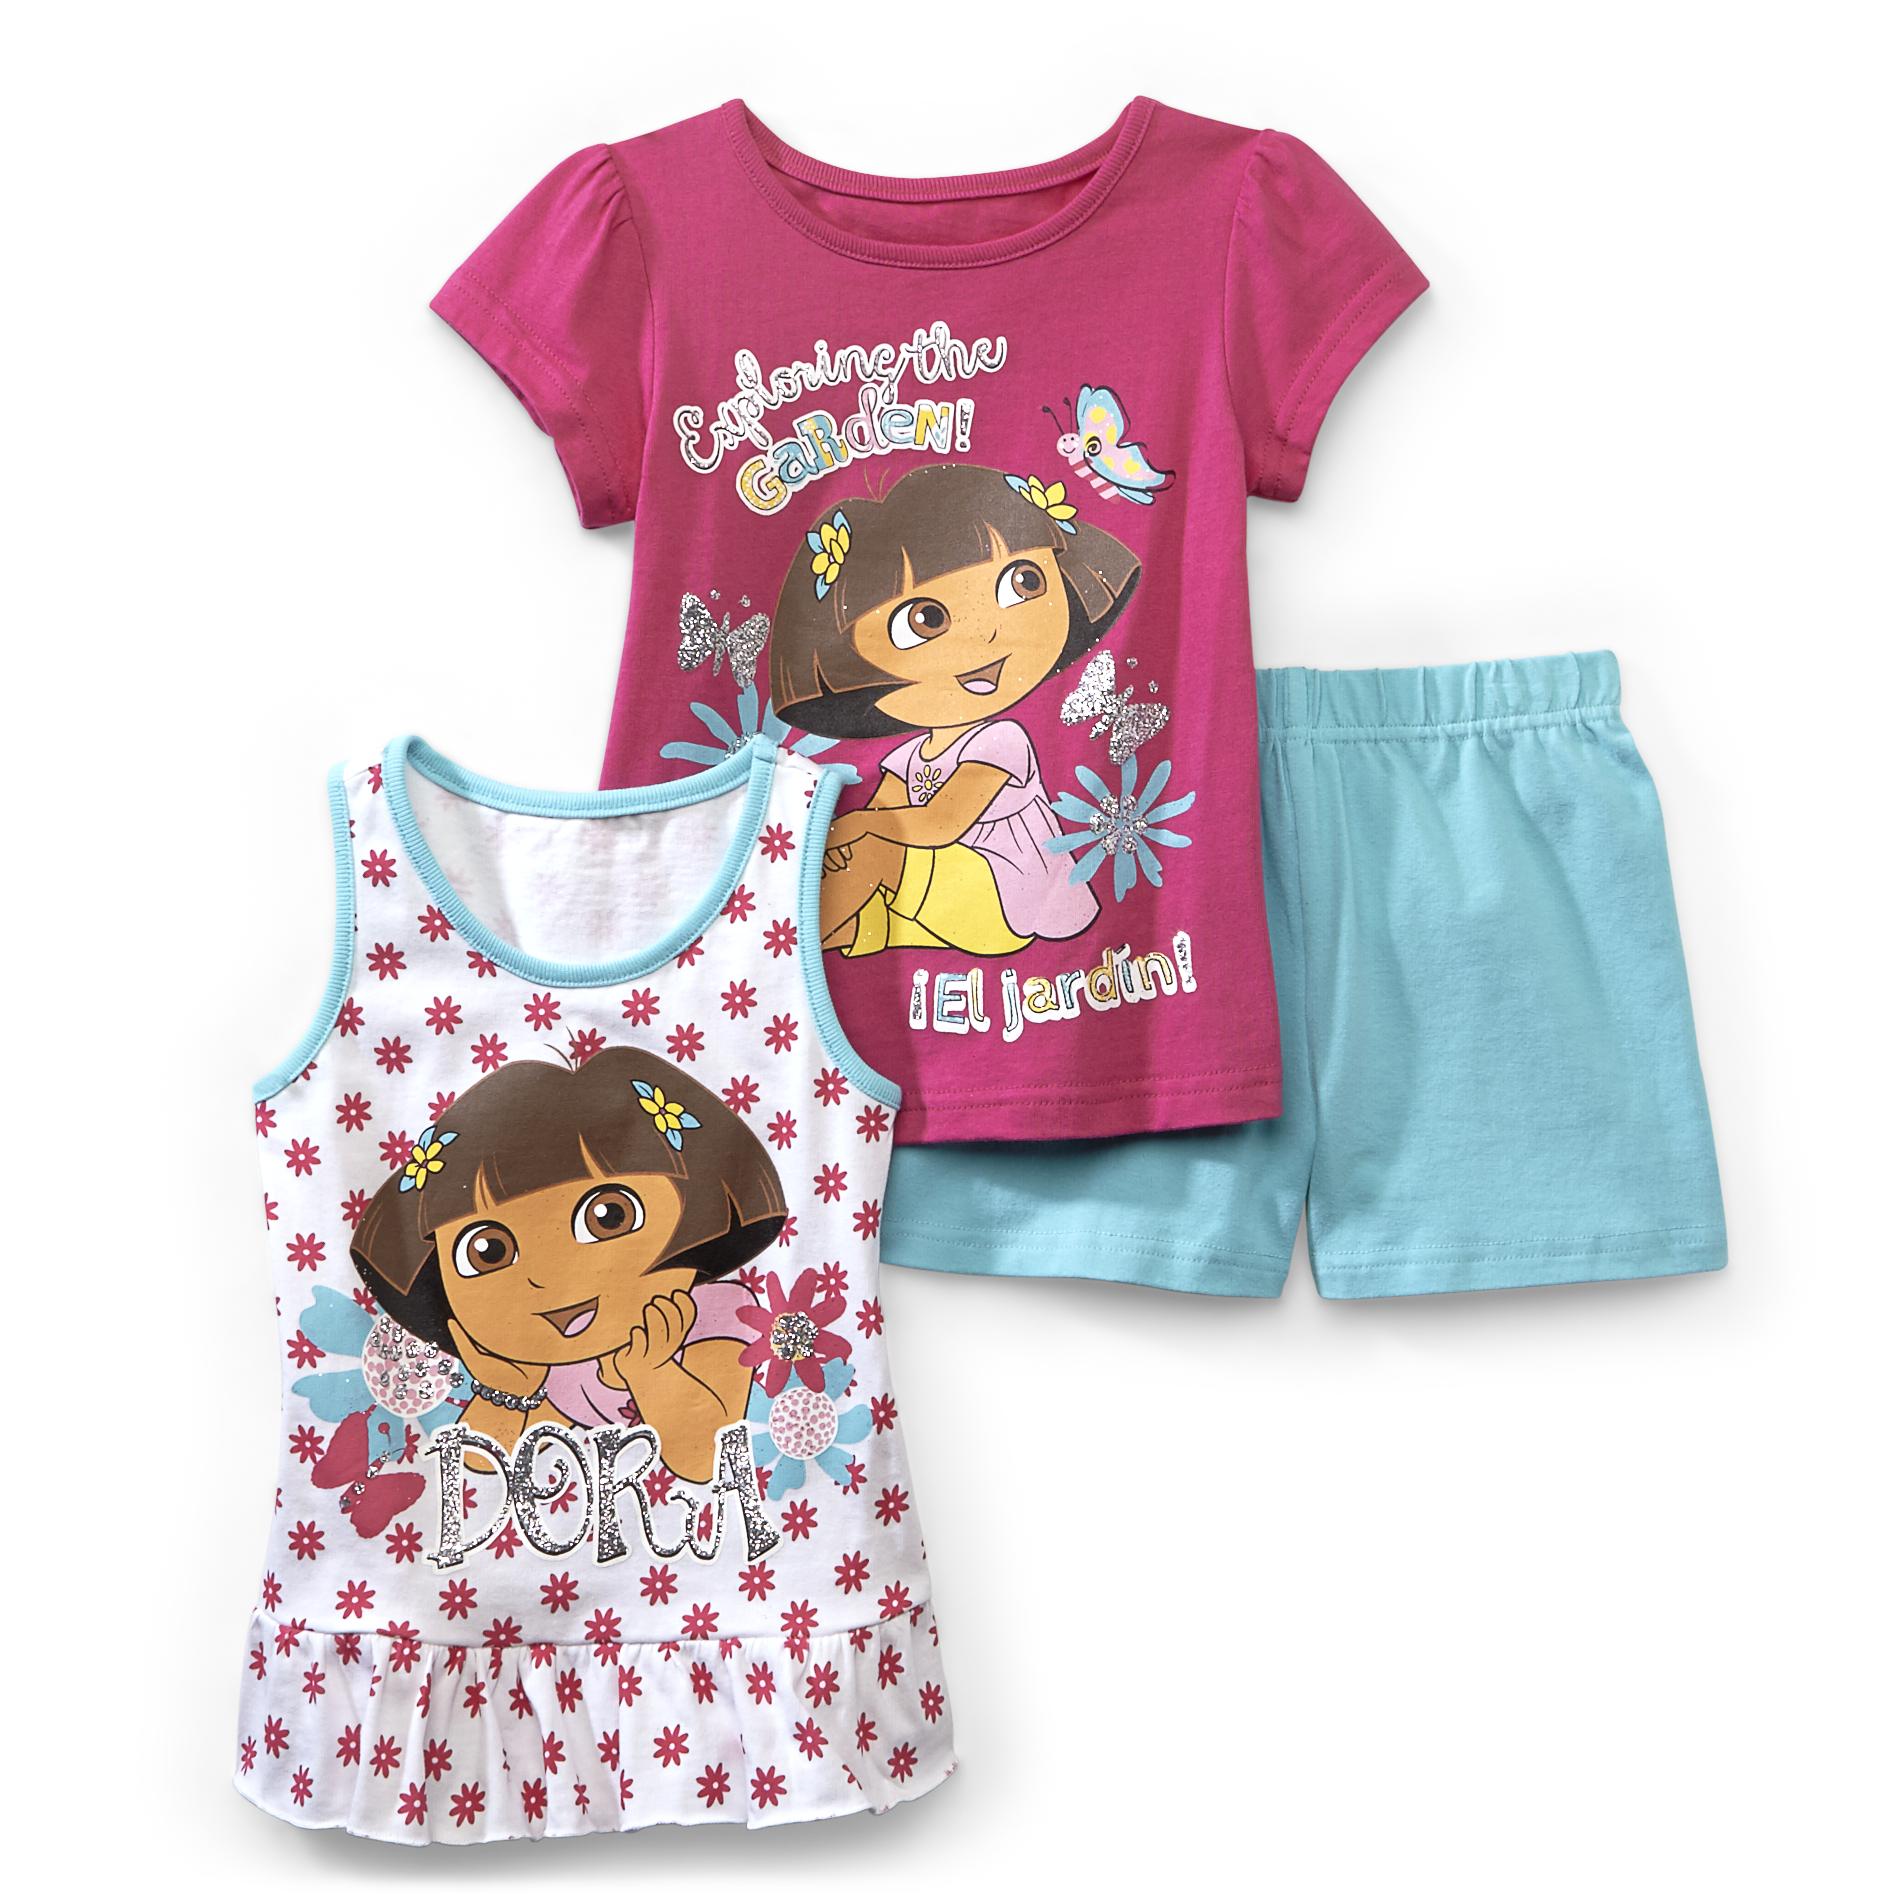 Nickelodeon Toddler Girl's T-Shirt  Tunic & Shorts - Dora